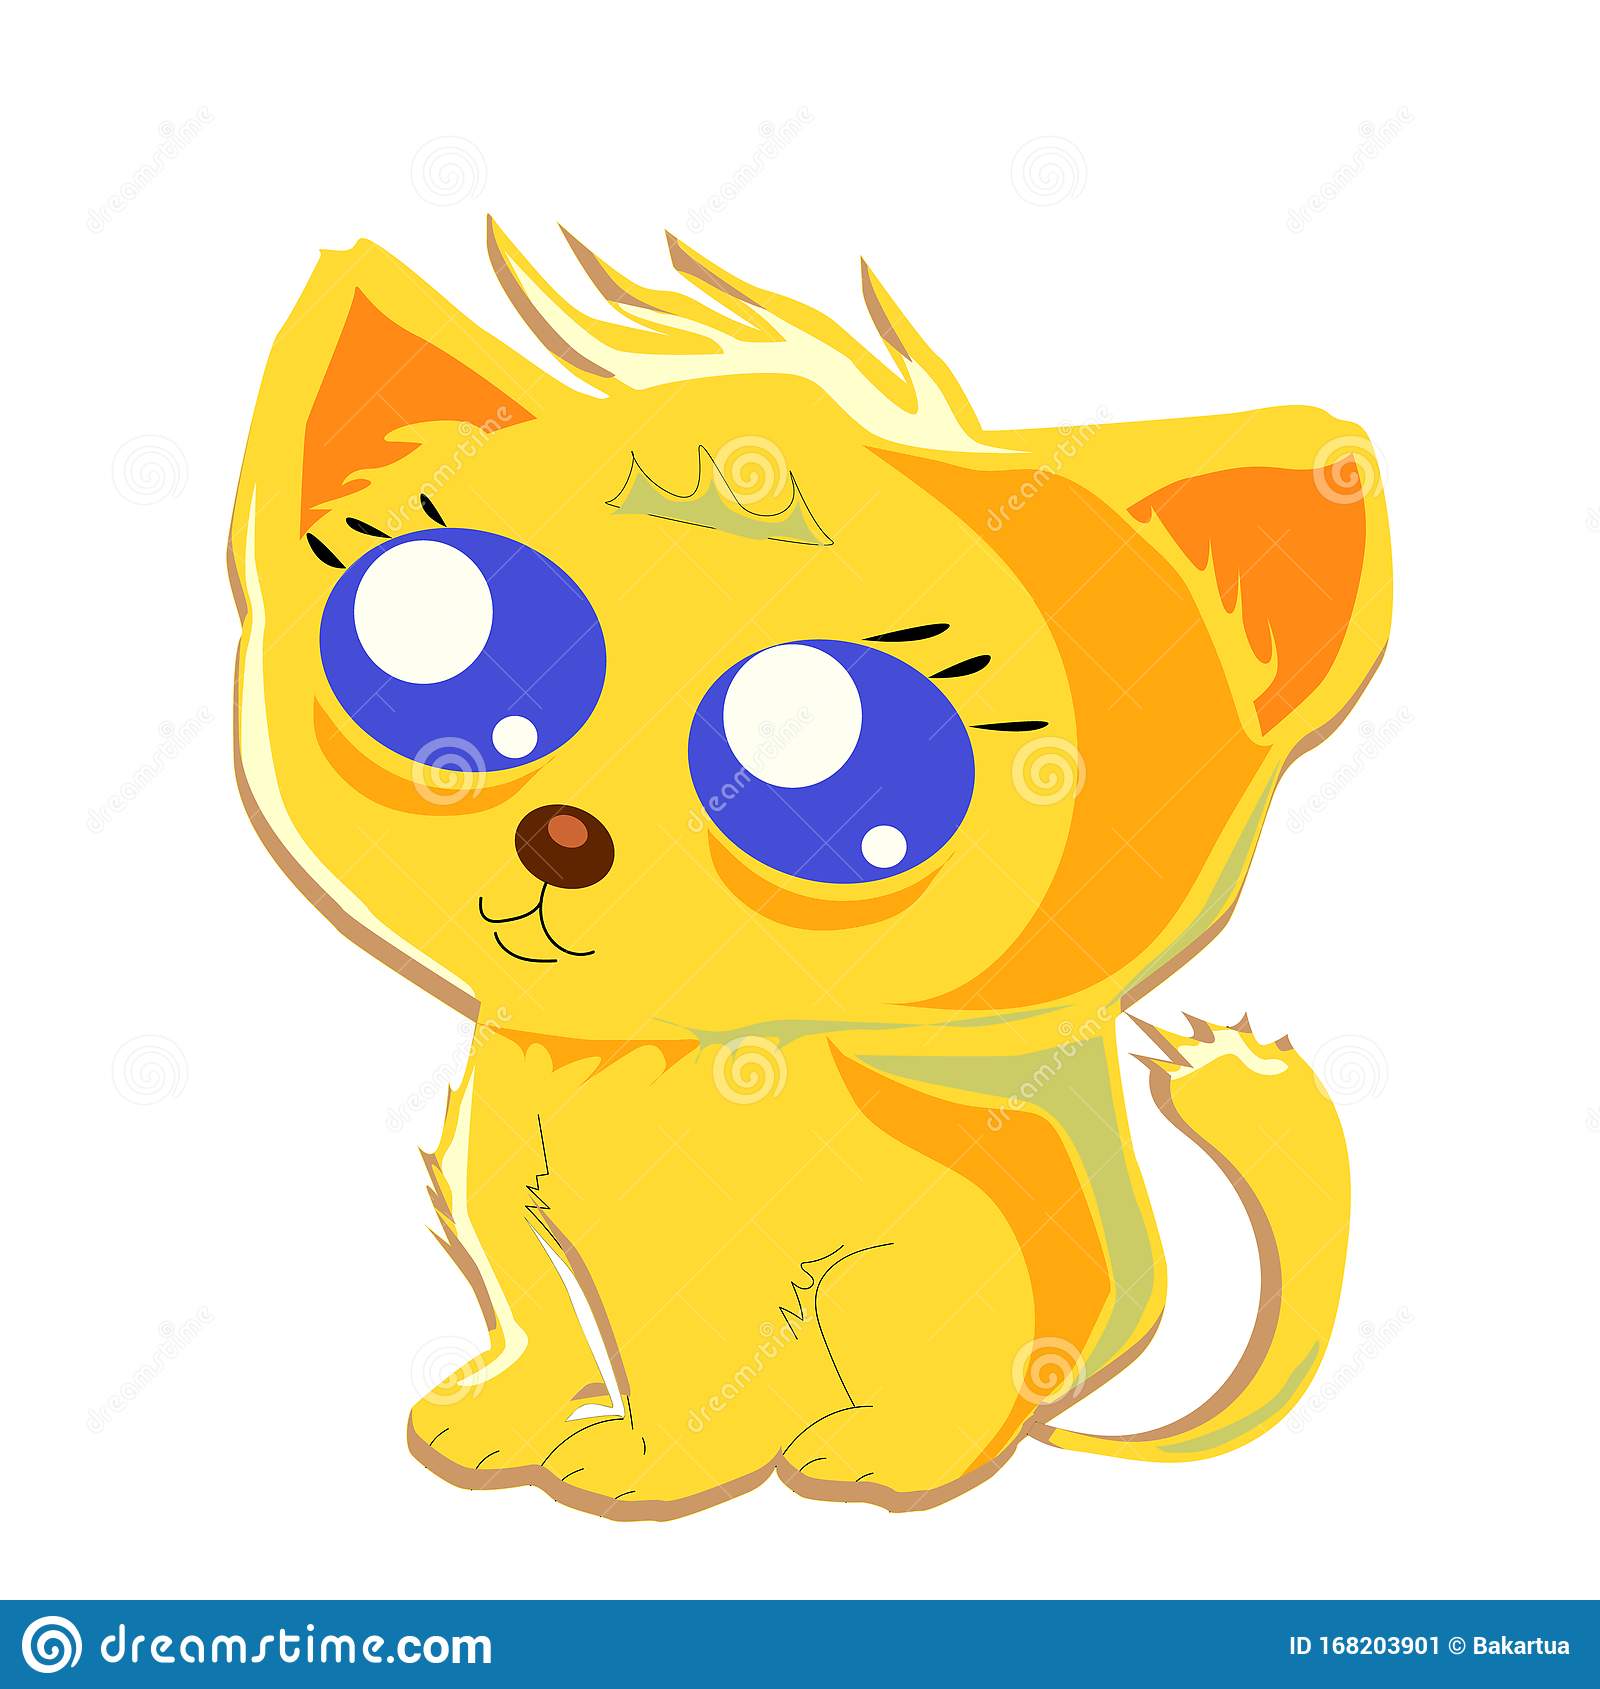 Cute Cat Cartoon With Big Blue Eyes. Stock Vector